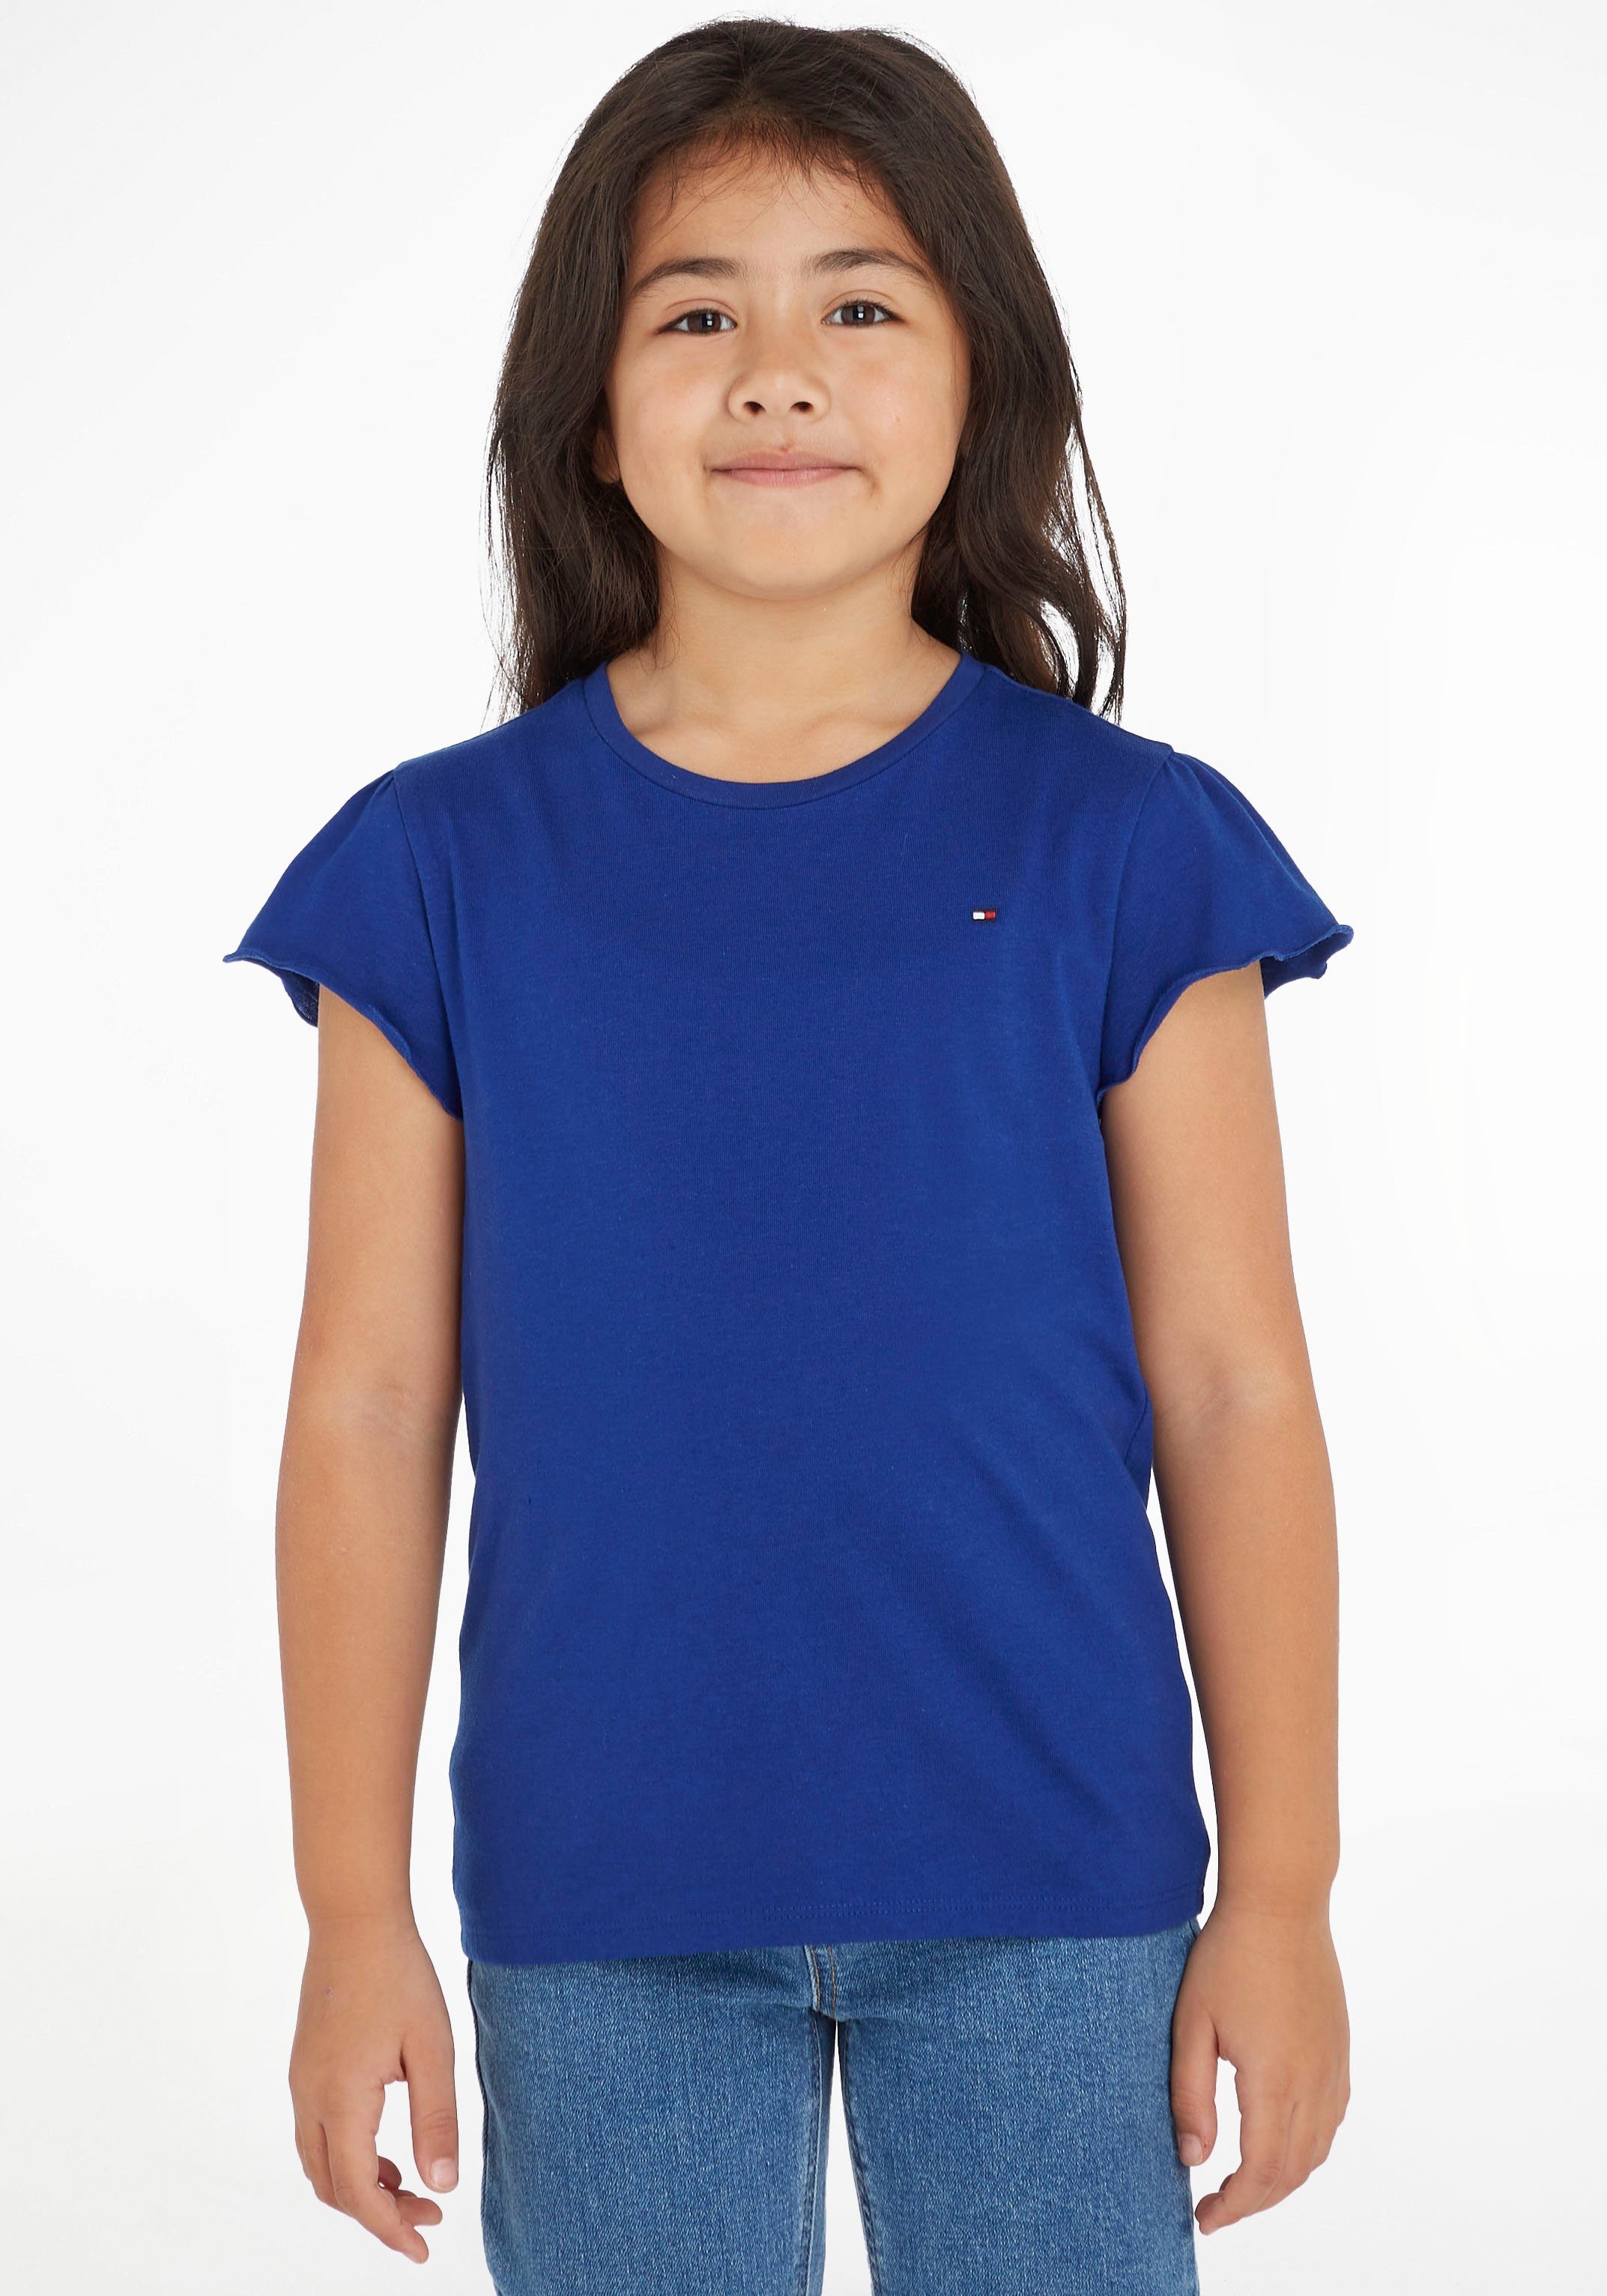 Tommy Hilfiger T-Shirt ESSENTIAL RUFFLE SLEEVE TOP S/S Kinder Kids Junior MiniMe,mit dezentem Label Navy_Voyage | T-Shirts